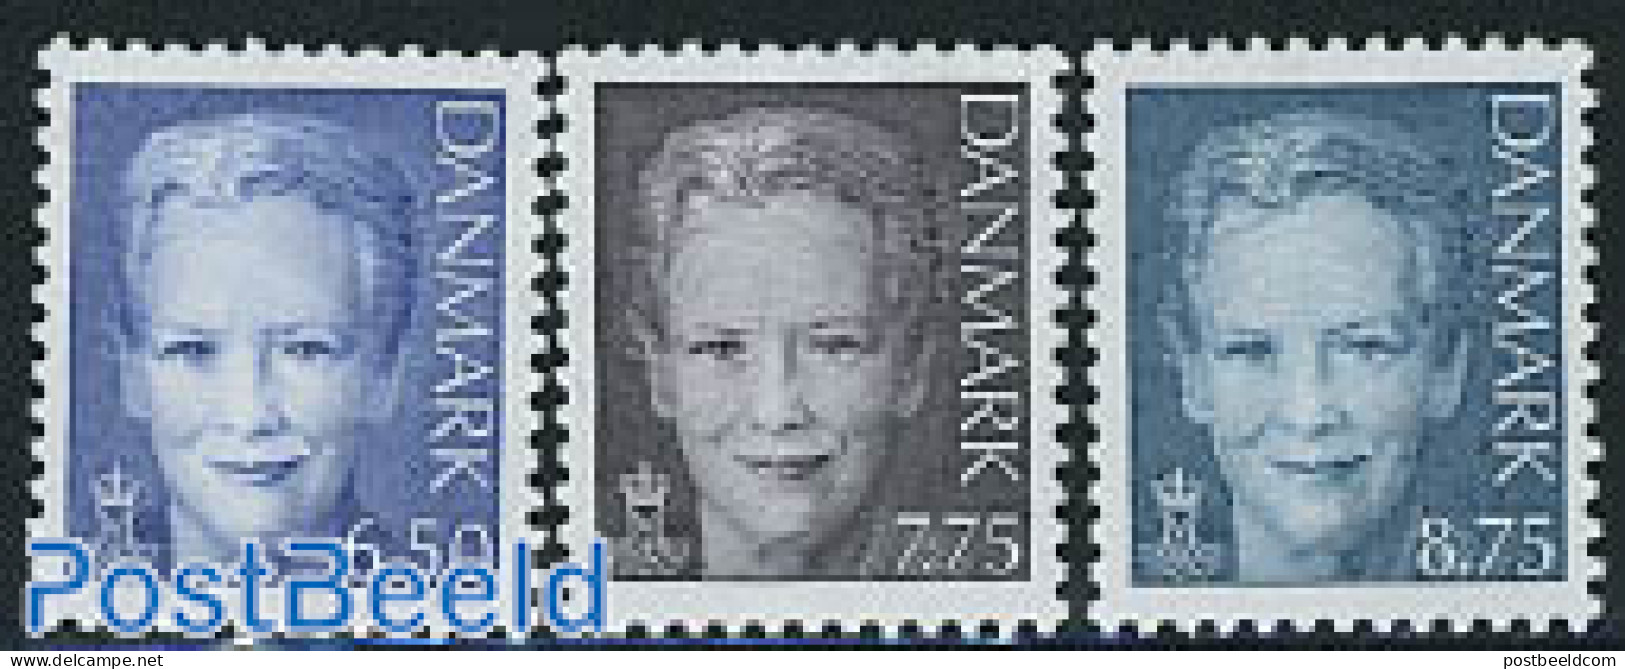 Denmark 2008 Definitives, Queen 3v, Mint NH - Nuovi